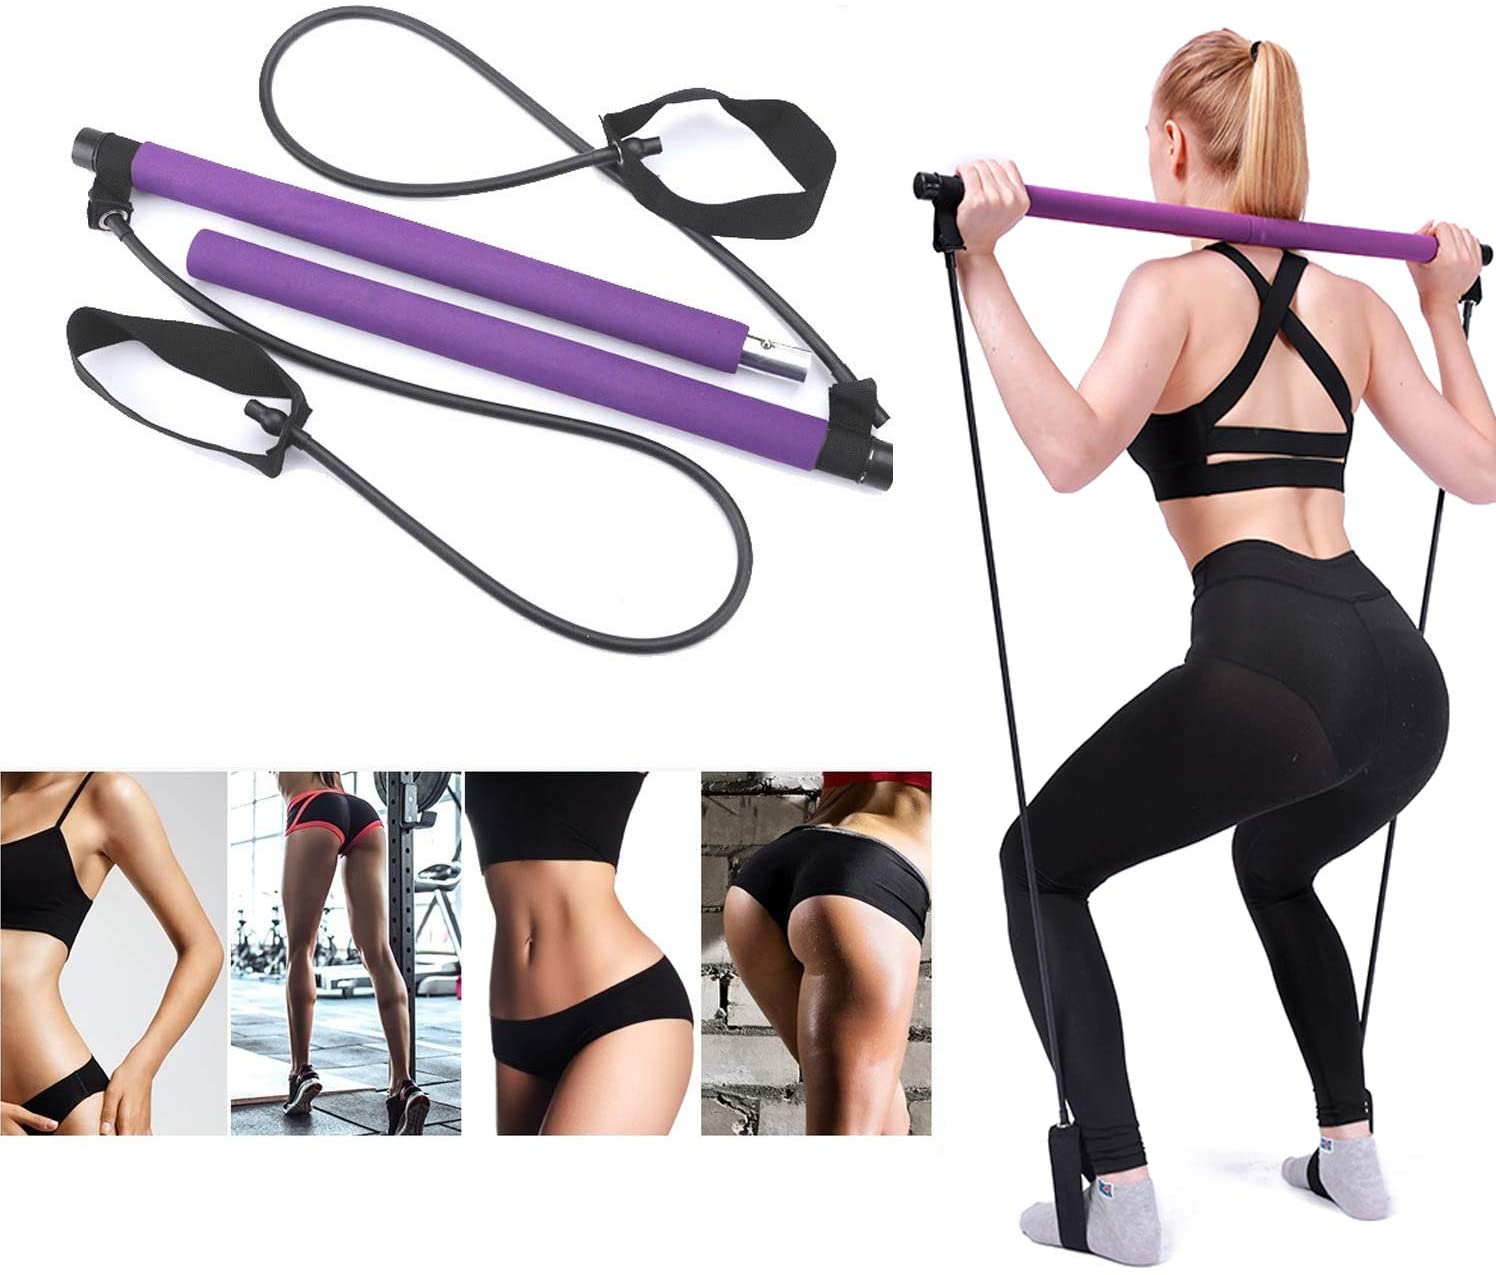 Adjustable Pilates Bar Kit Resistance Band Exercise Stick Toning